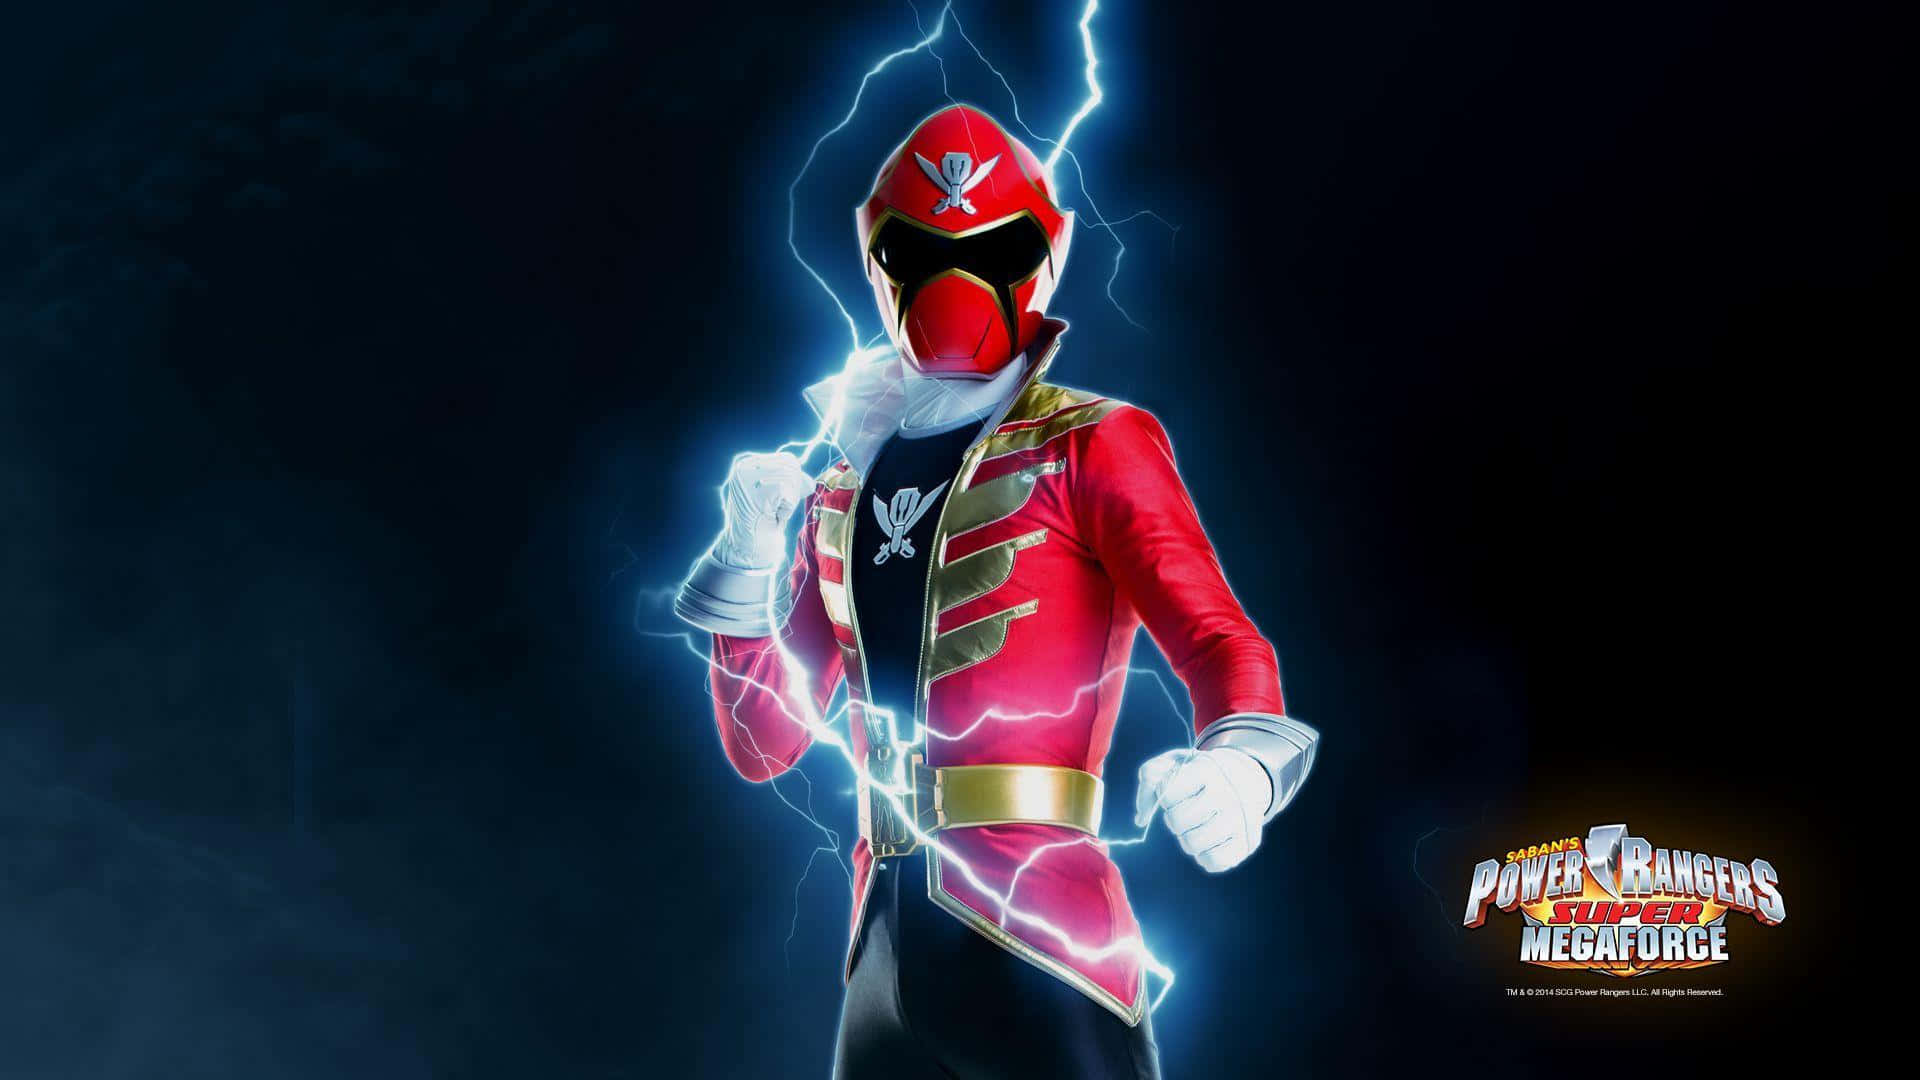 Red Ranger Megaforce Electric Charge Wallpaper